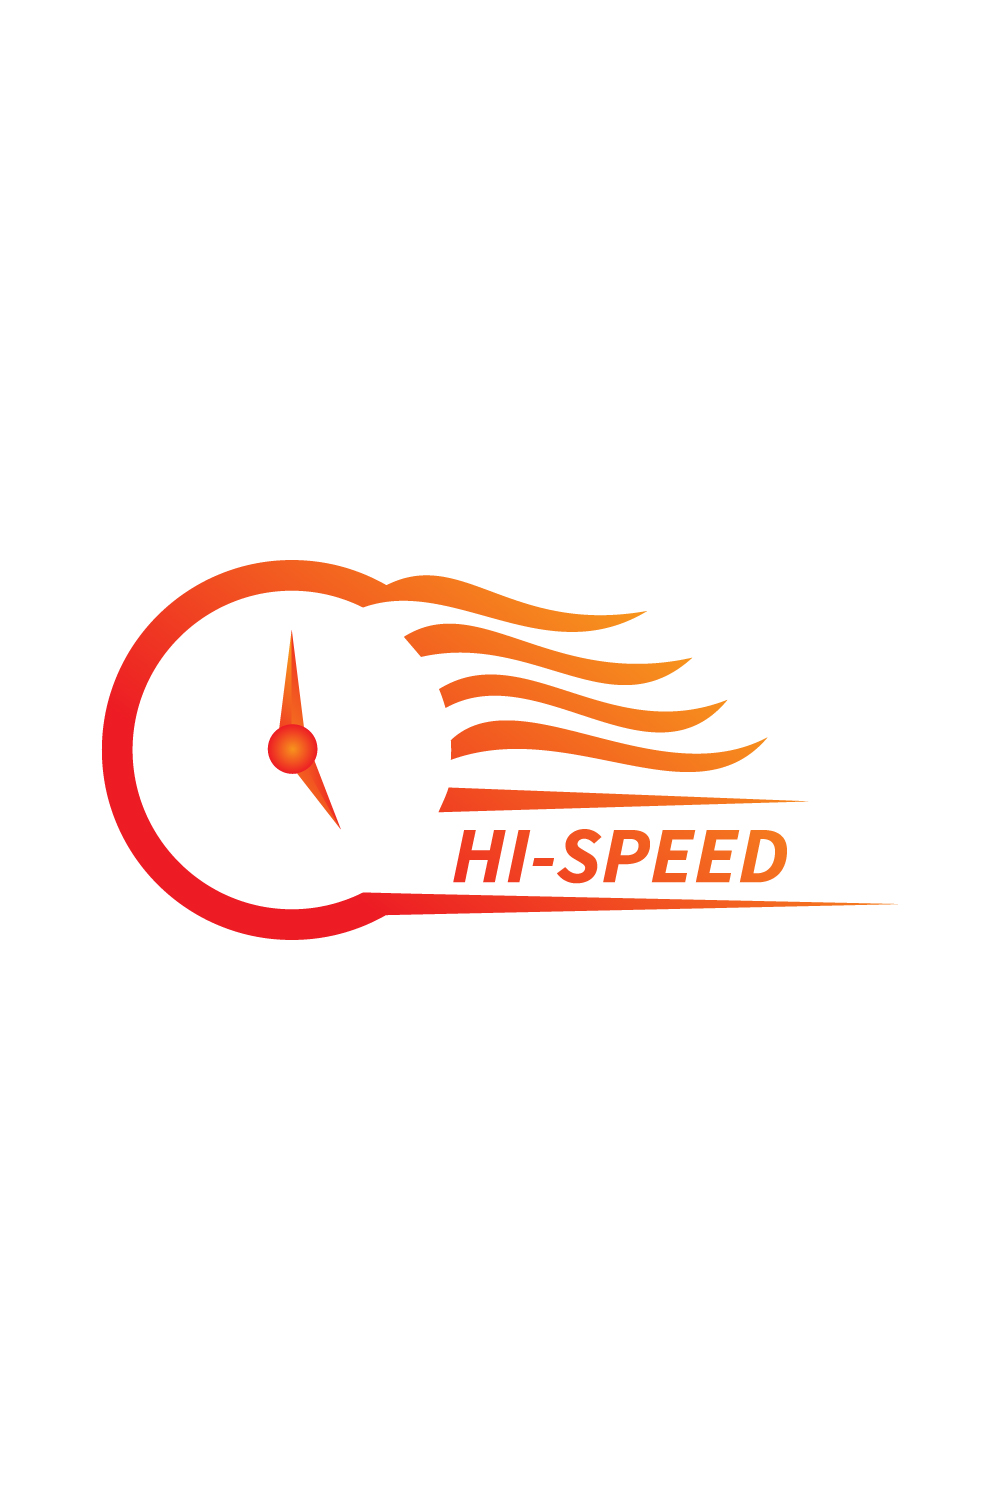 Professional HI speed logo design vector images Speed logo vector template arts Fast logo design monogram best identity pinterest preview image.